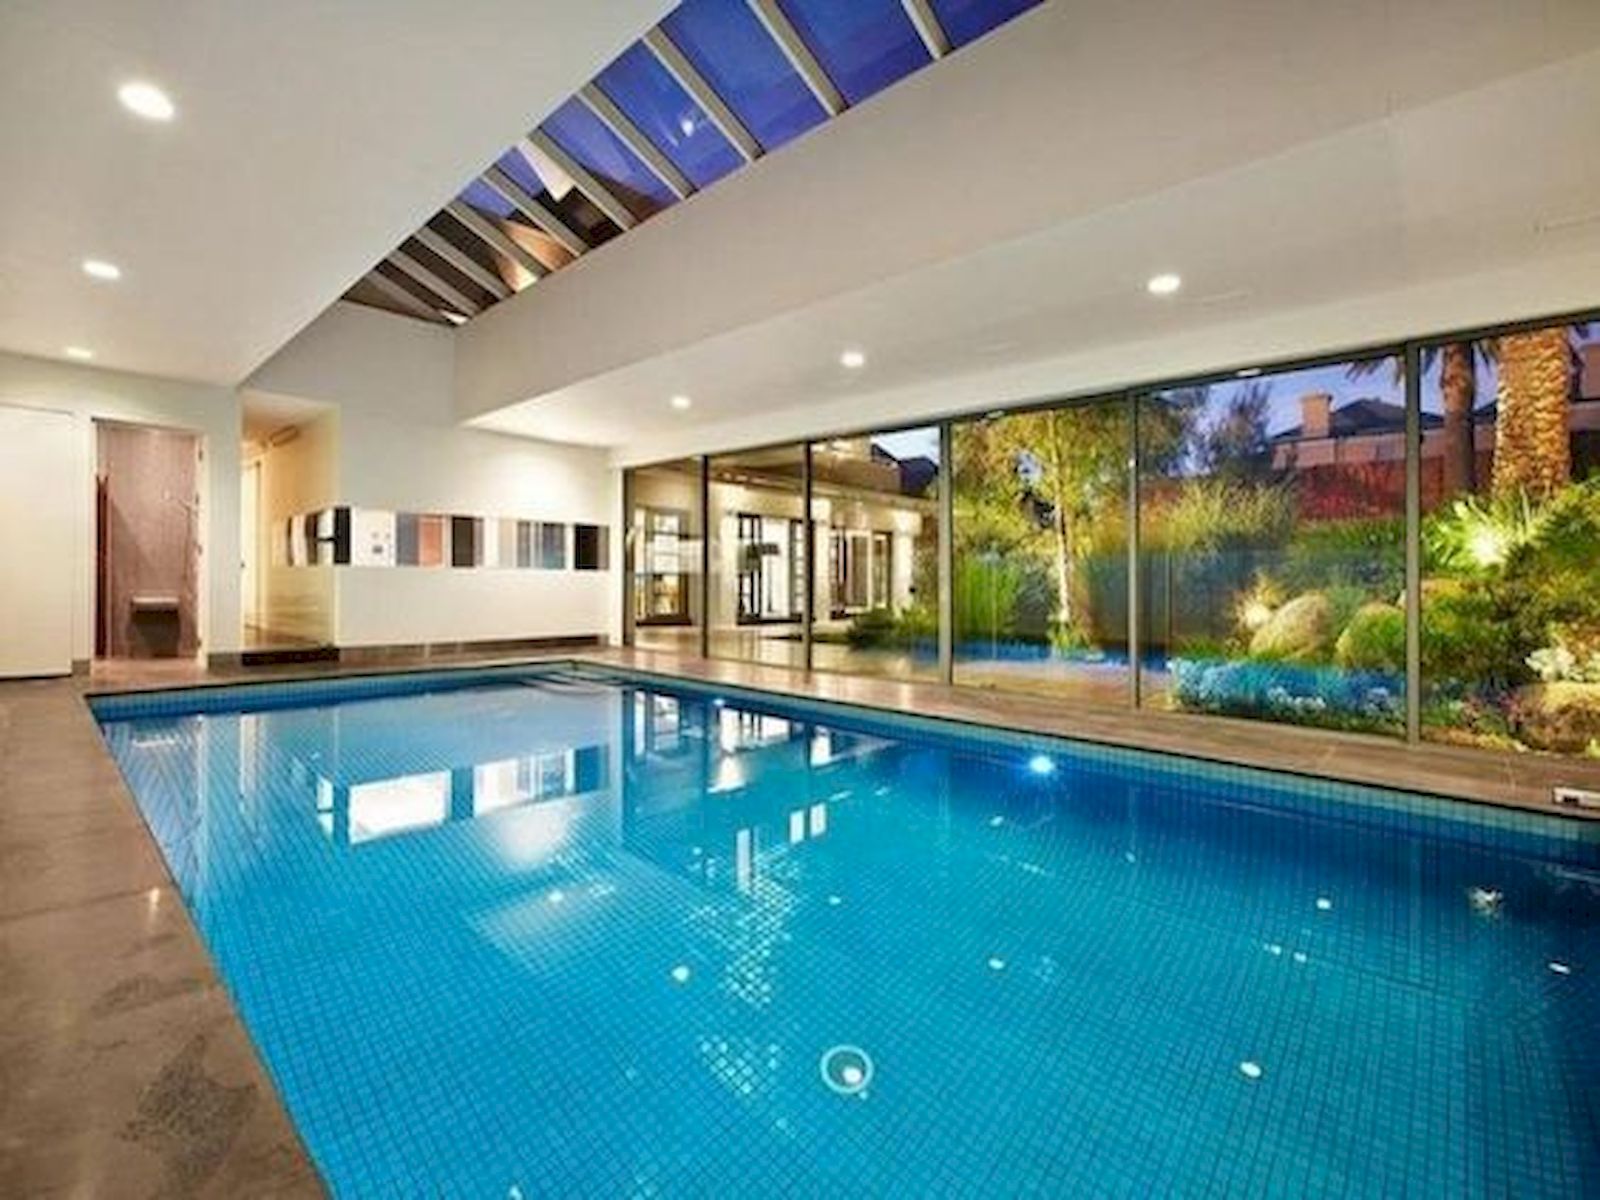 46 Fantastic Modern Swimming Pool Design Ideas (1)